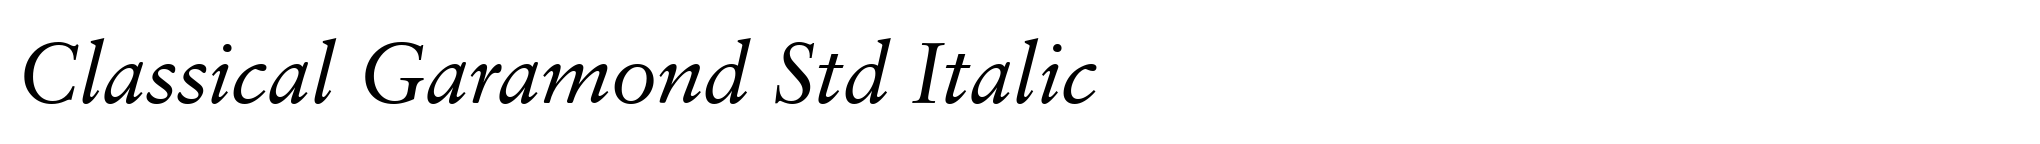 Classical Garamond Std Italic image